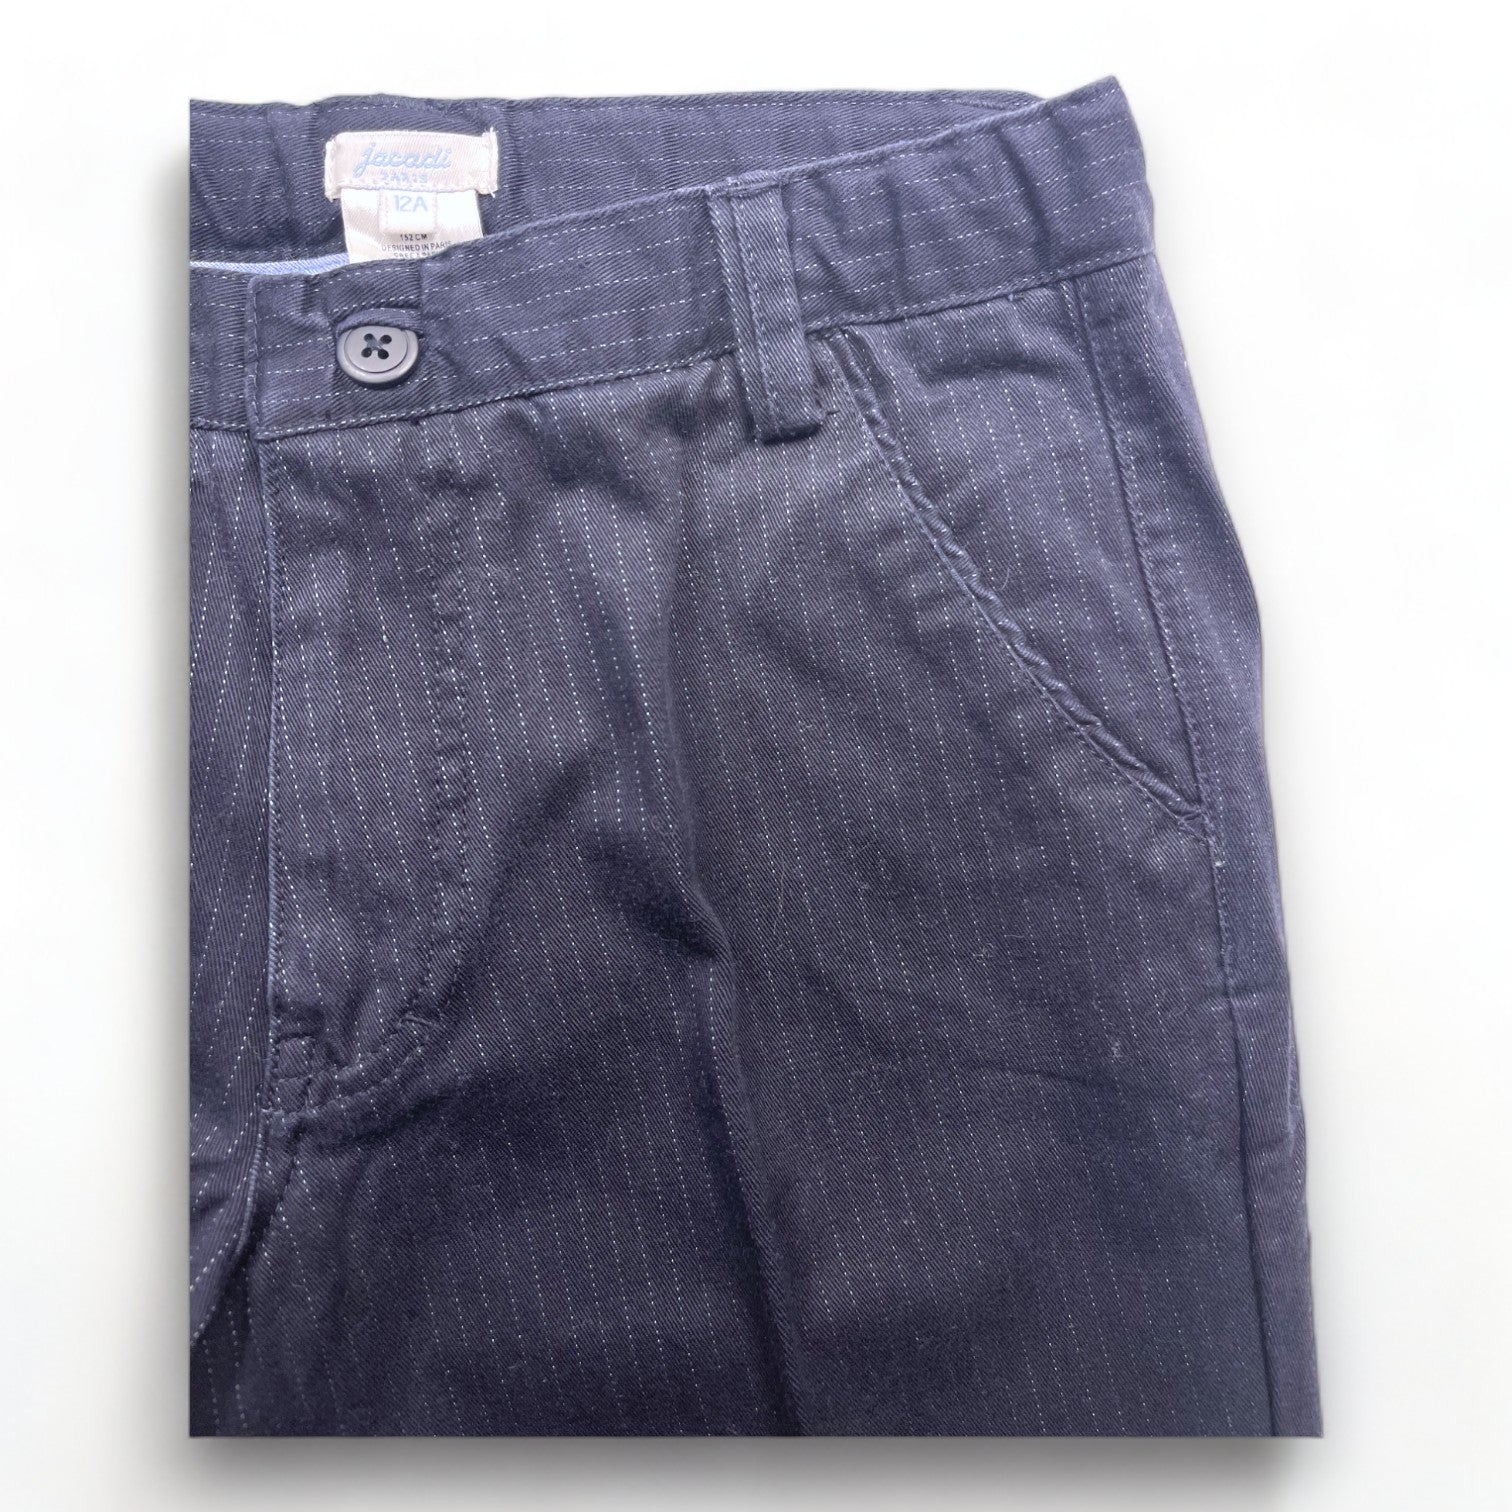 JACADI - Pantalon de costume droit bleu marine à rayures - 12 ans